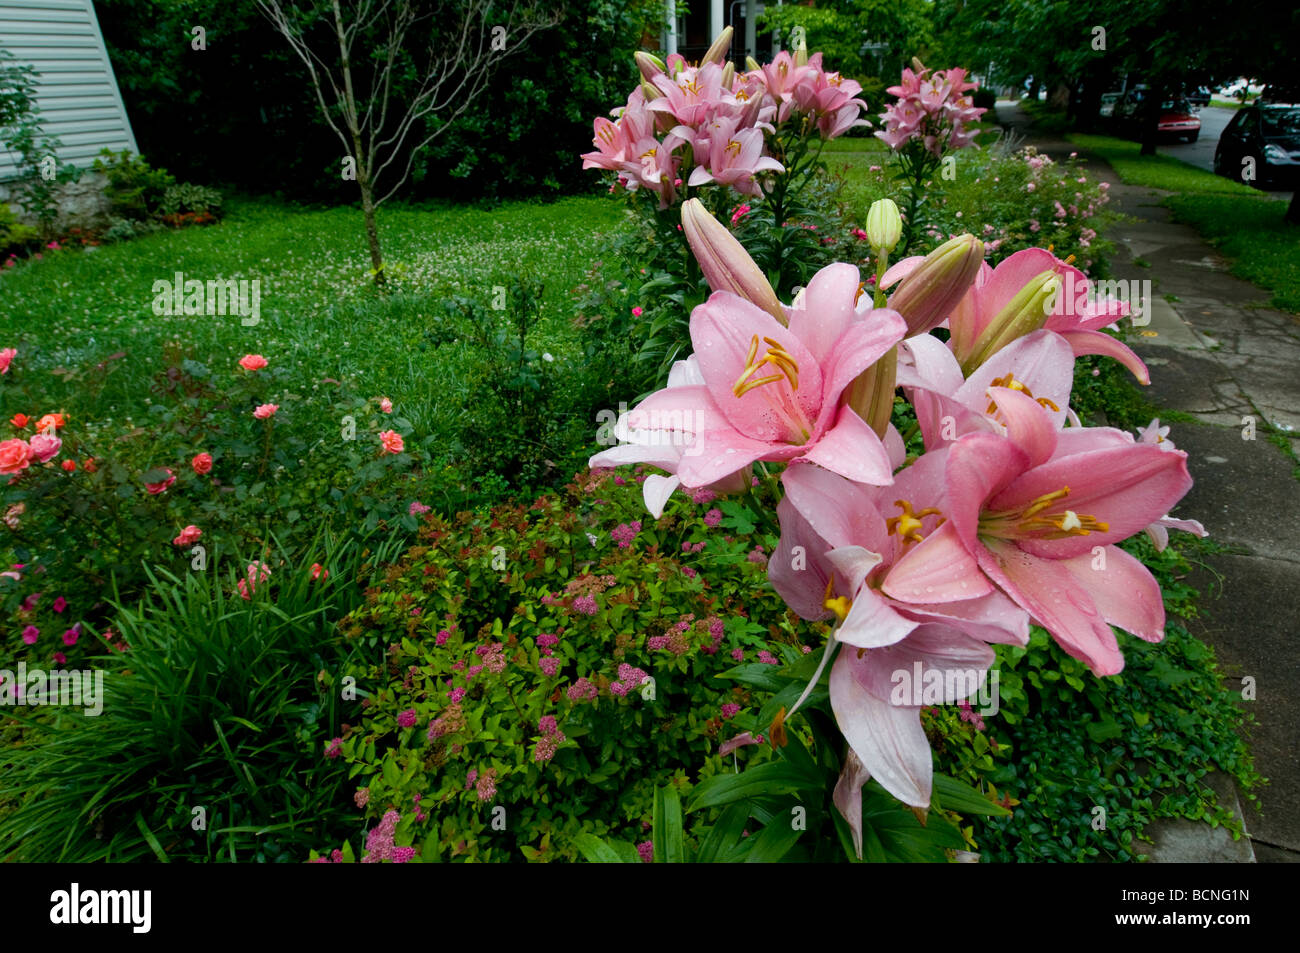 pink lilies in garden Stock Photo